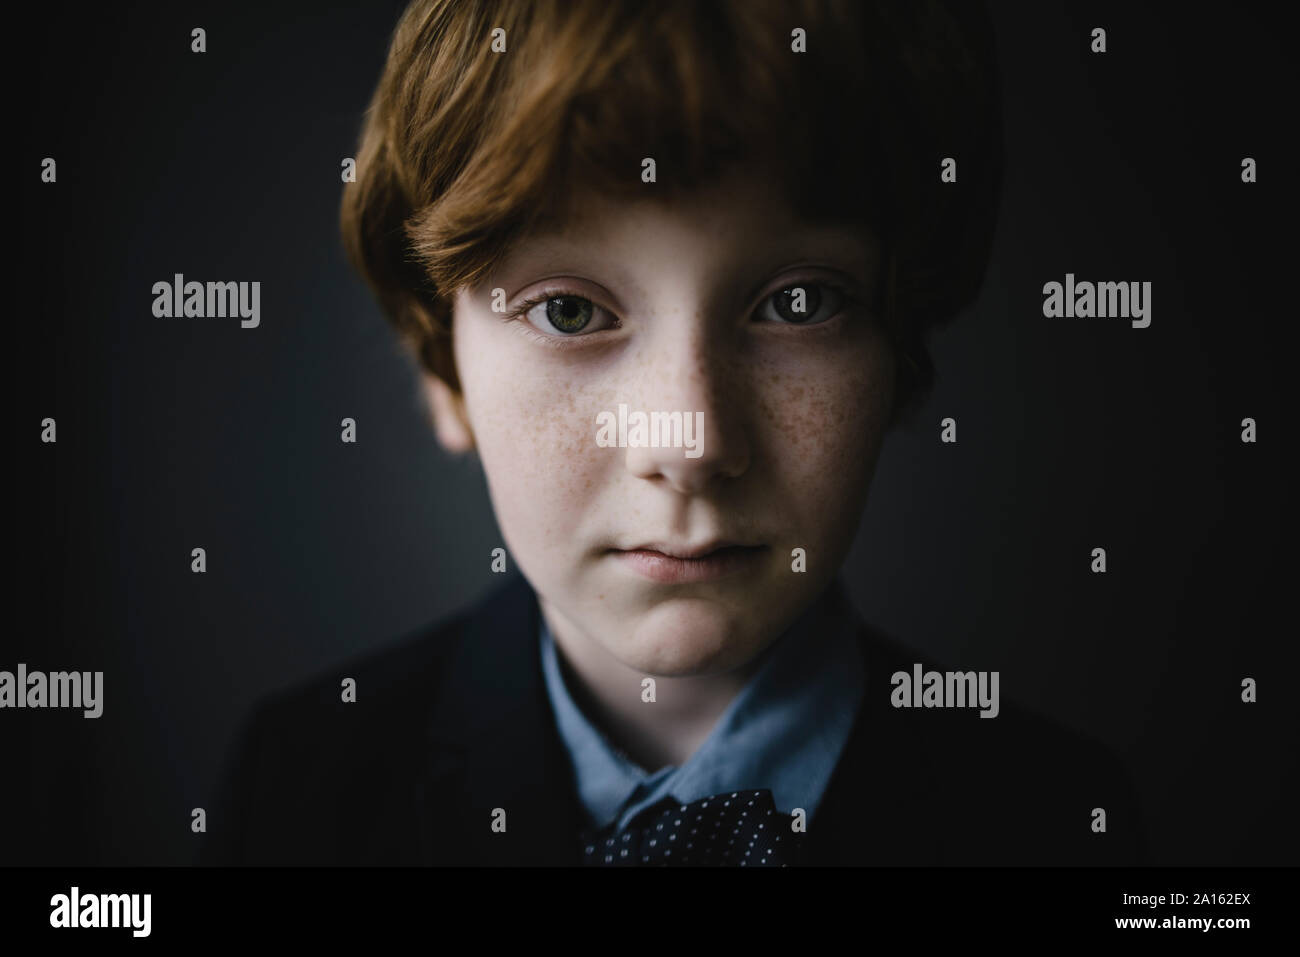 Portrait of sad boy with freckles Stock Photo